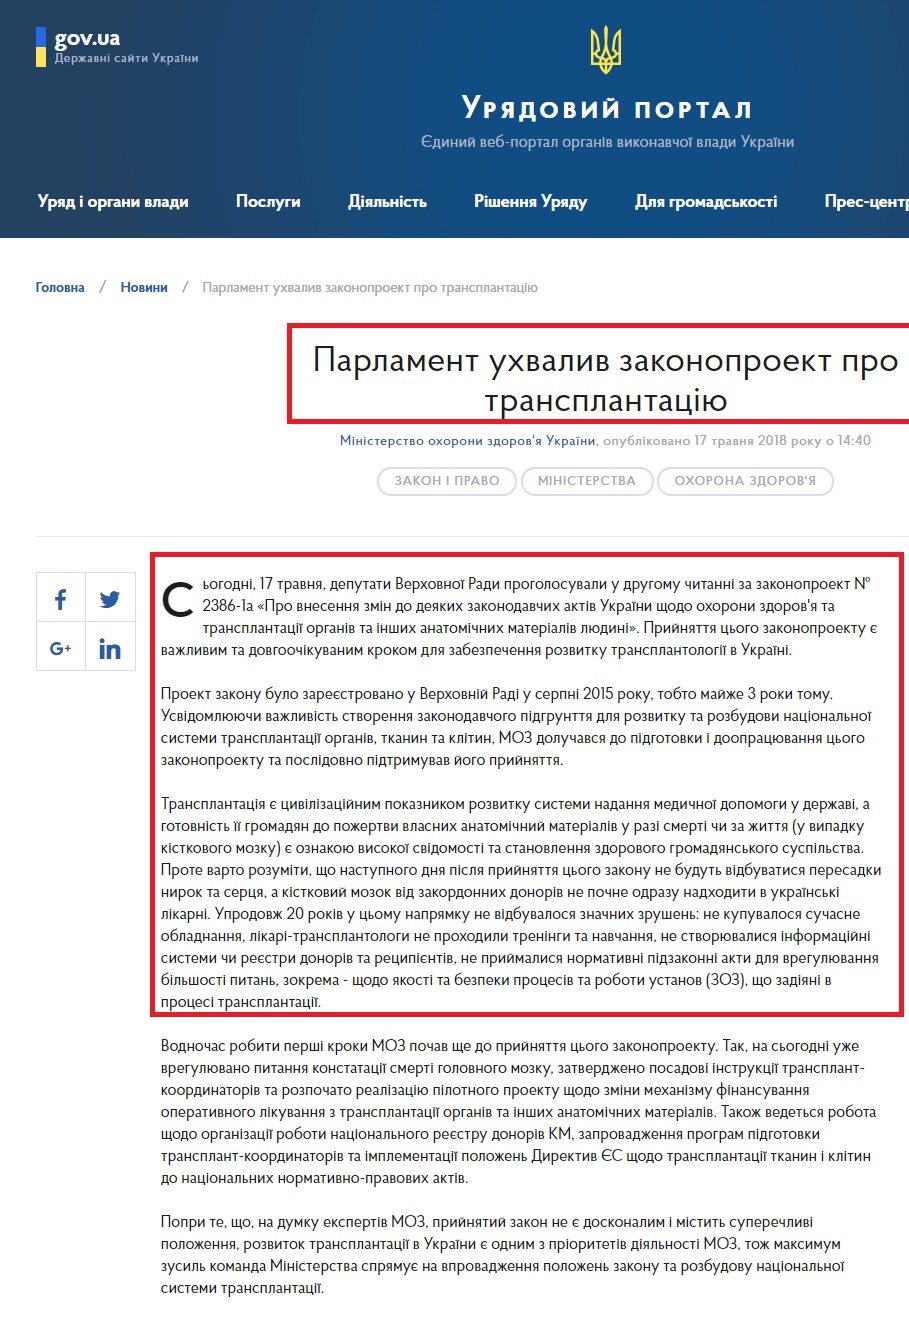 https://www.kmu.gov.ua/ua/news/parlament-uhvaliv-zakonoproekt-pro-transplantaciyu